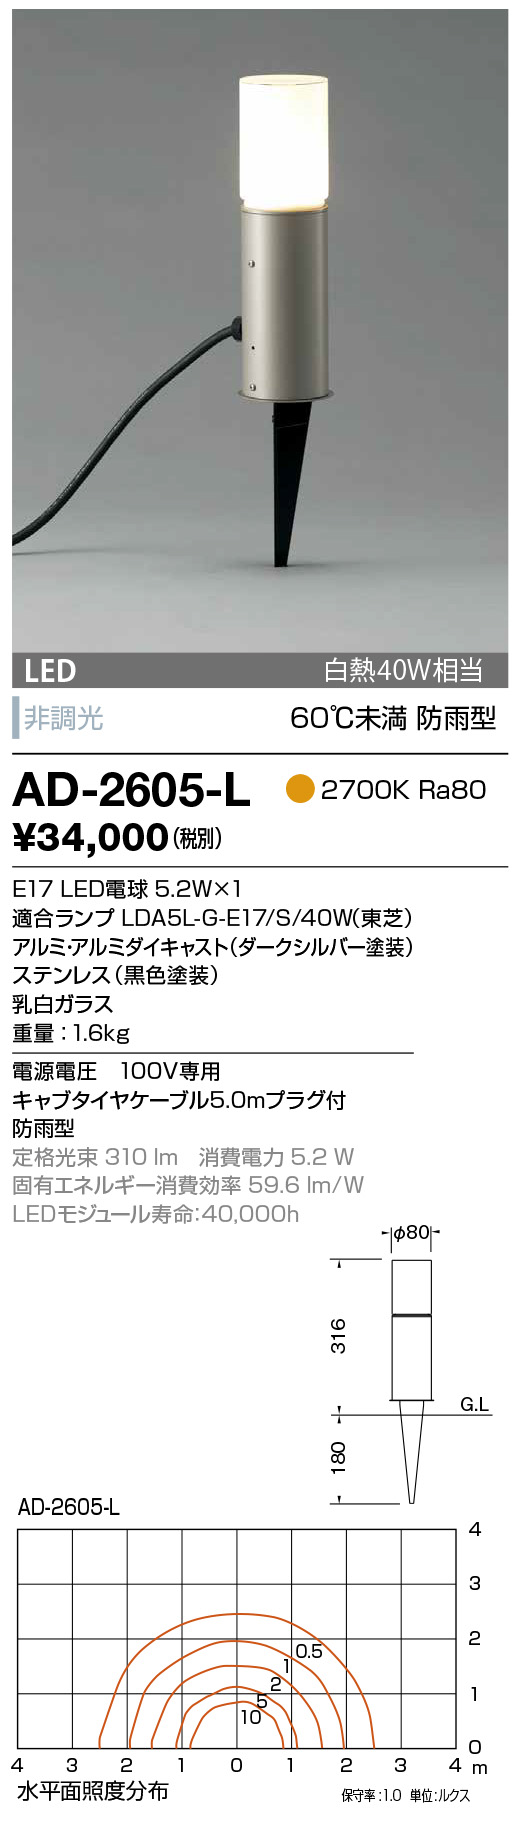 AD-2605-L(山田照明) 商品詳細 ～ 照明器具・換気扇他、電設資材販売のブライト